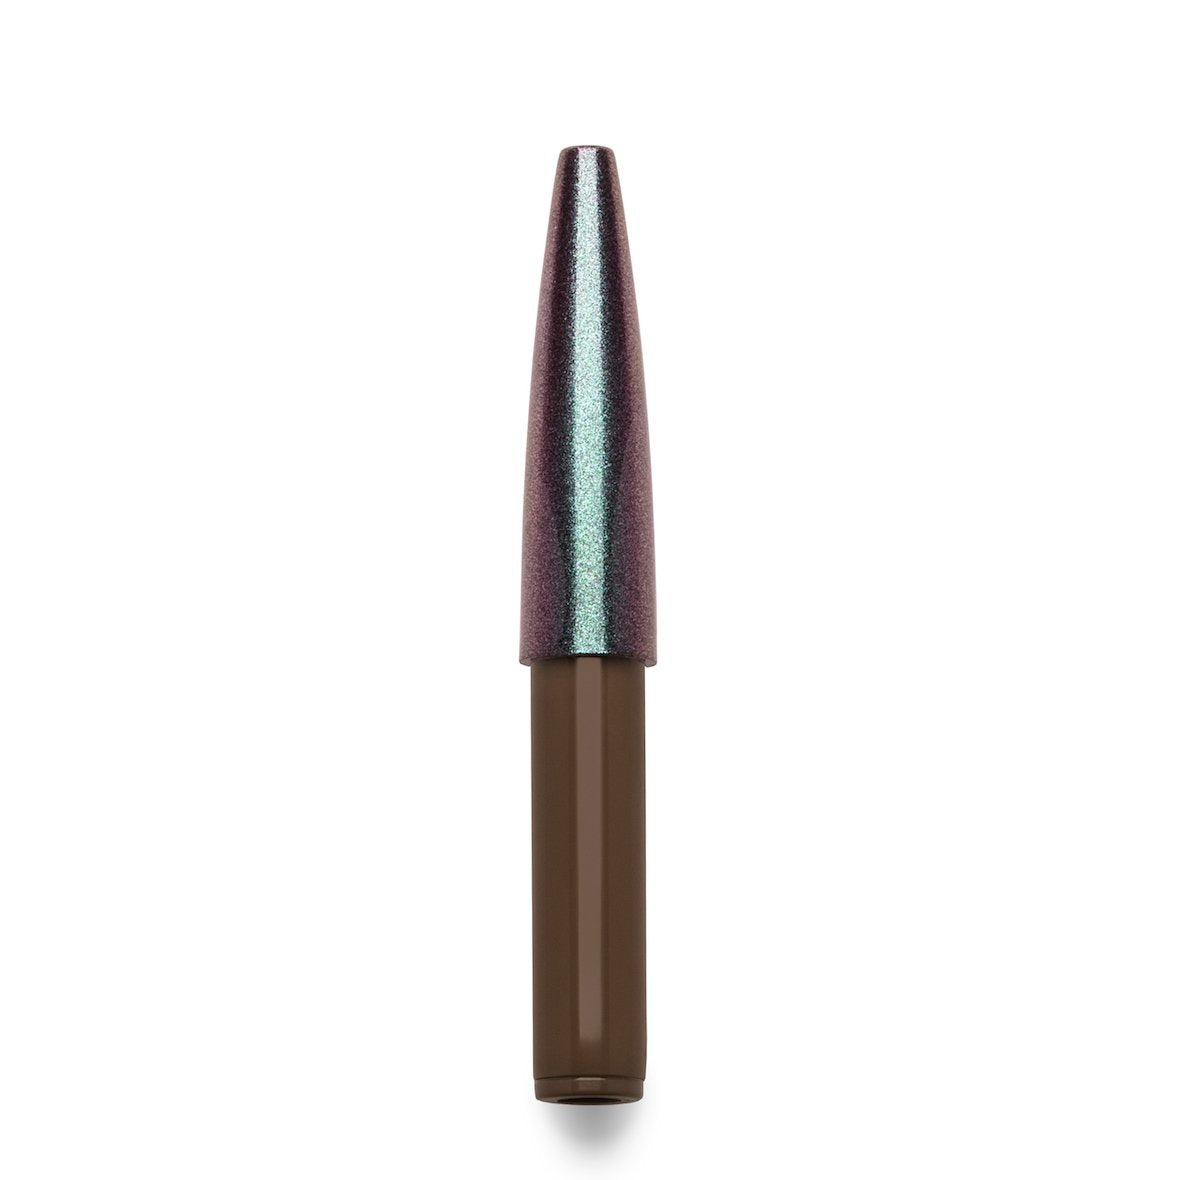 BRUNETTE - BROWN - precise eyebrow defining pencil refill in brunette shade